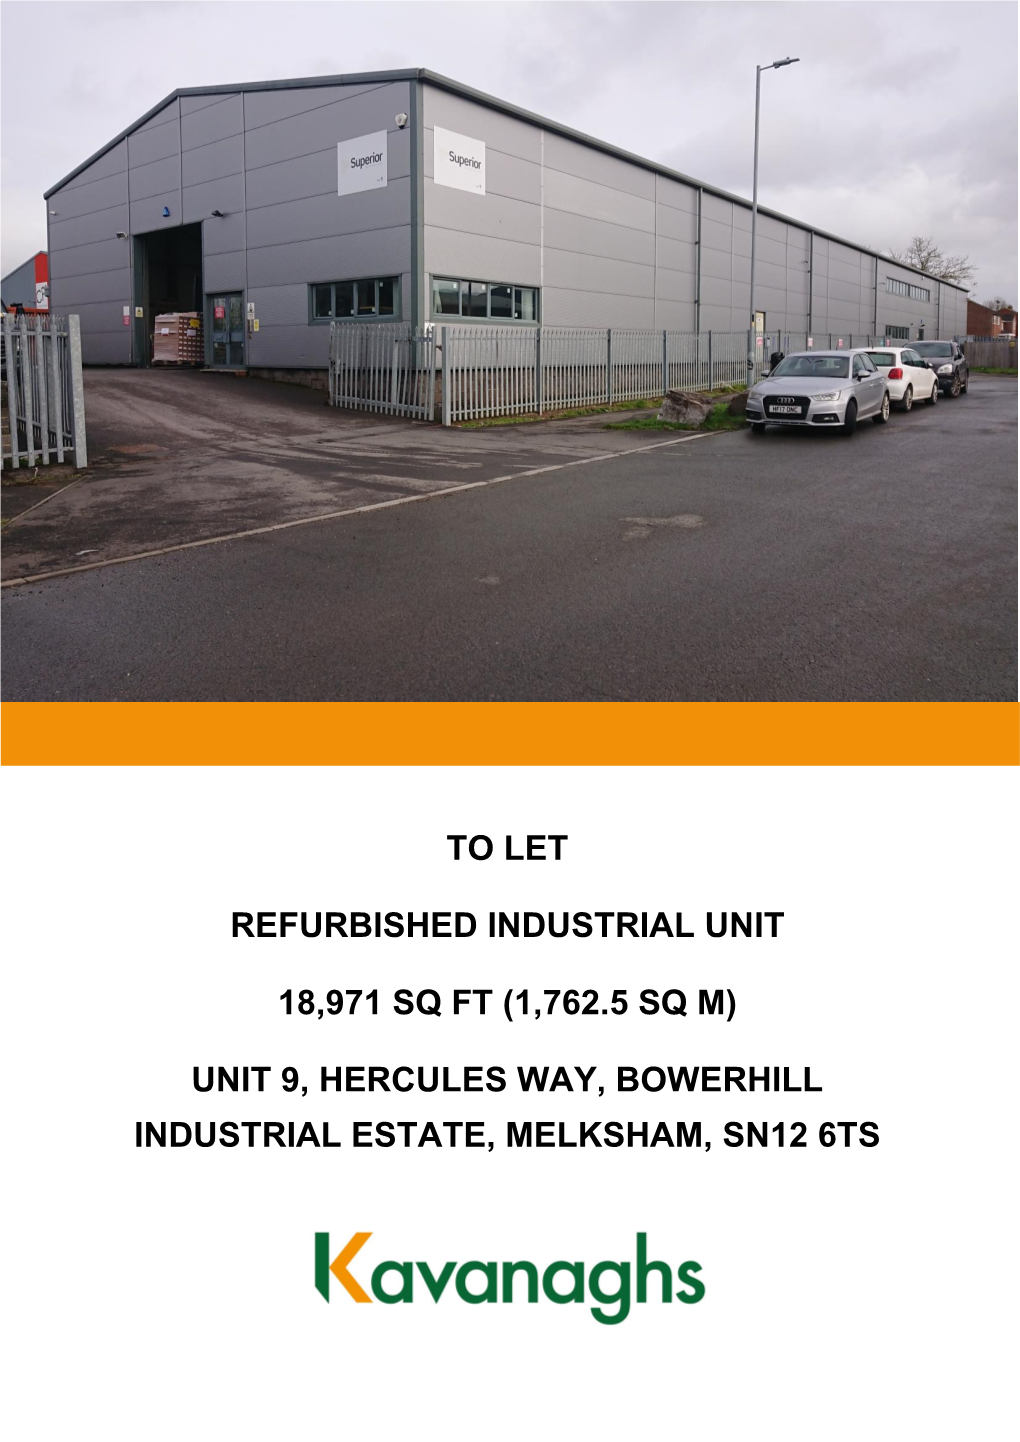 Unit 9, Hercules Way, Bowerhill Industrial Estate, Melksham, Sn12 6Ts